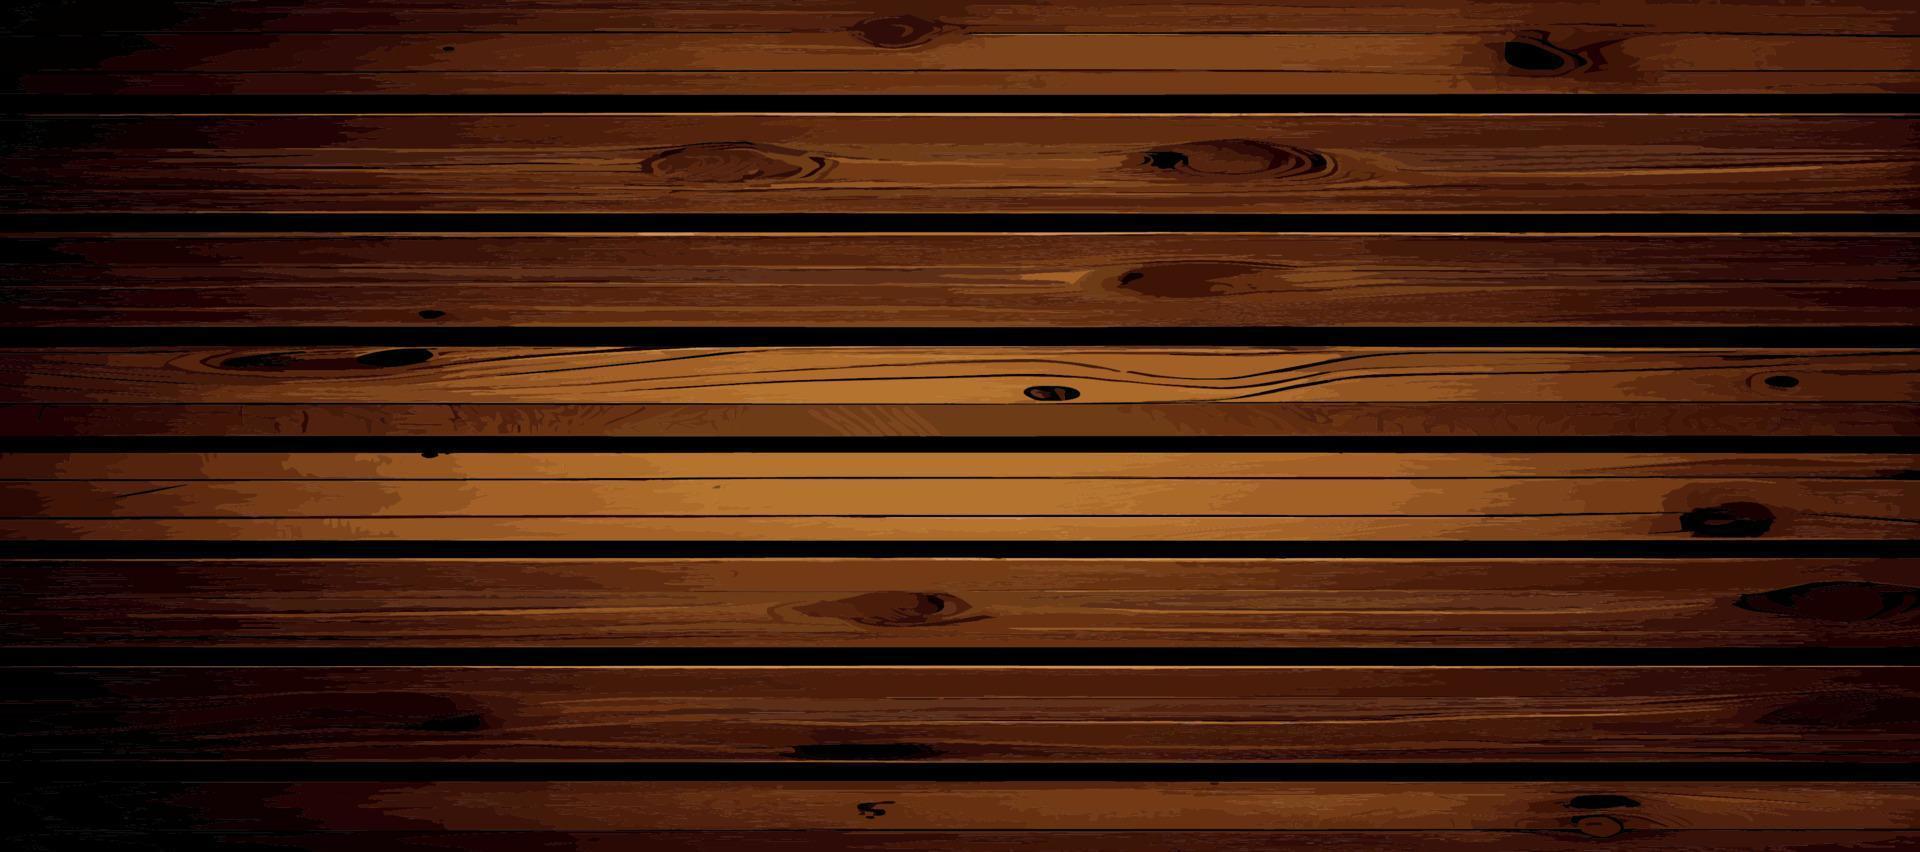 realistisk panorama- trä textur planka bakgrund, fiber textur mönster - vektor